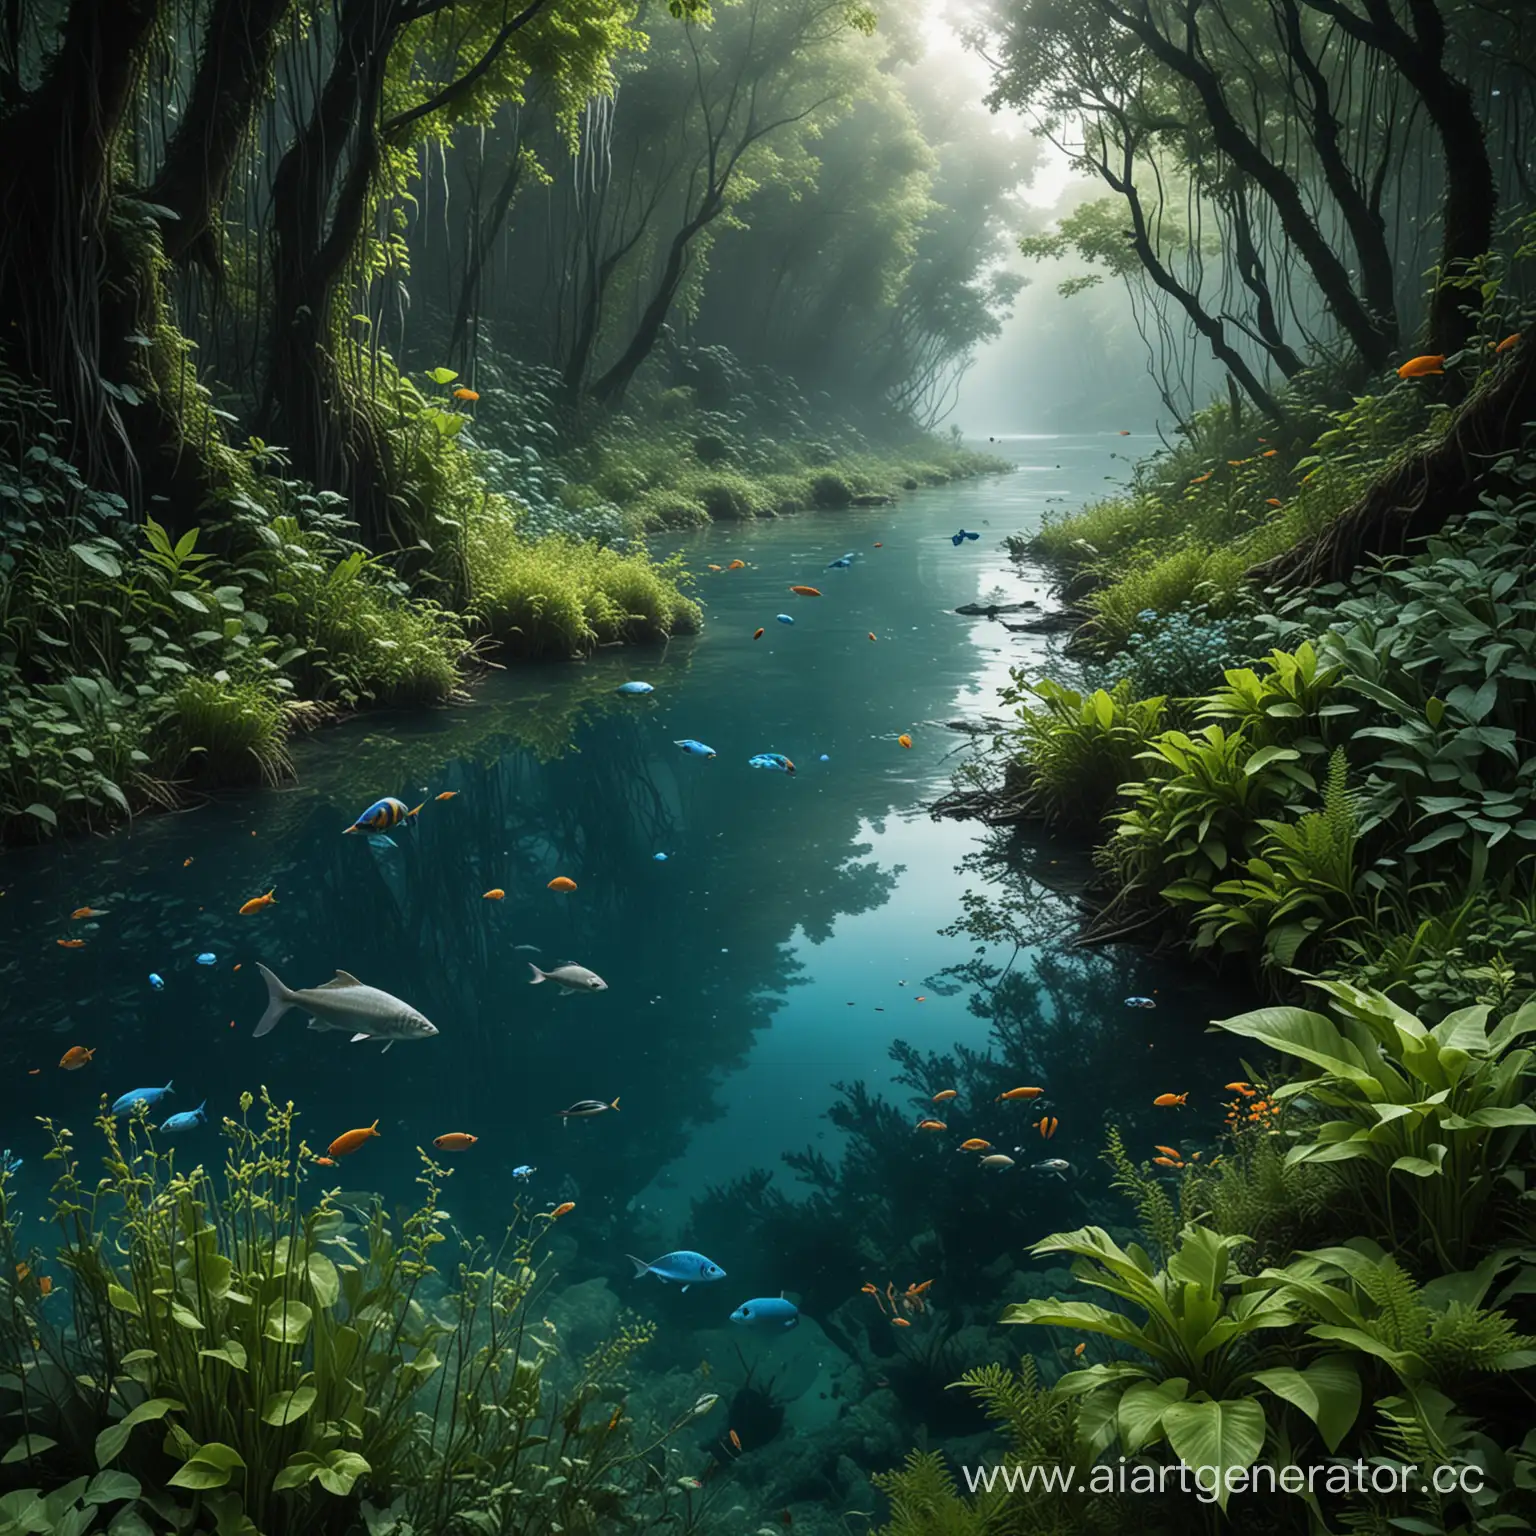 Untamed-Wilderness-Unusual-Flora-Fauna-and-a-Blue-River